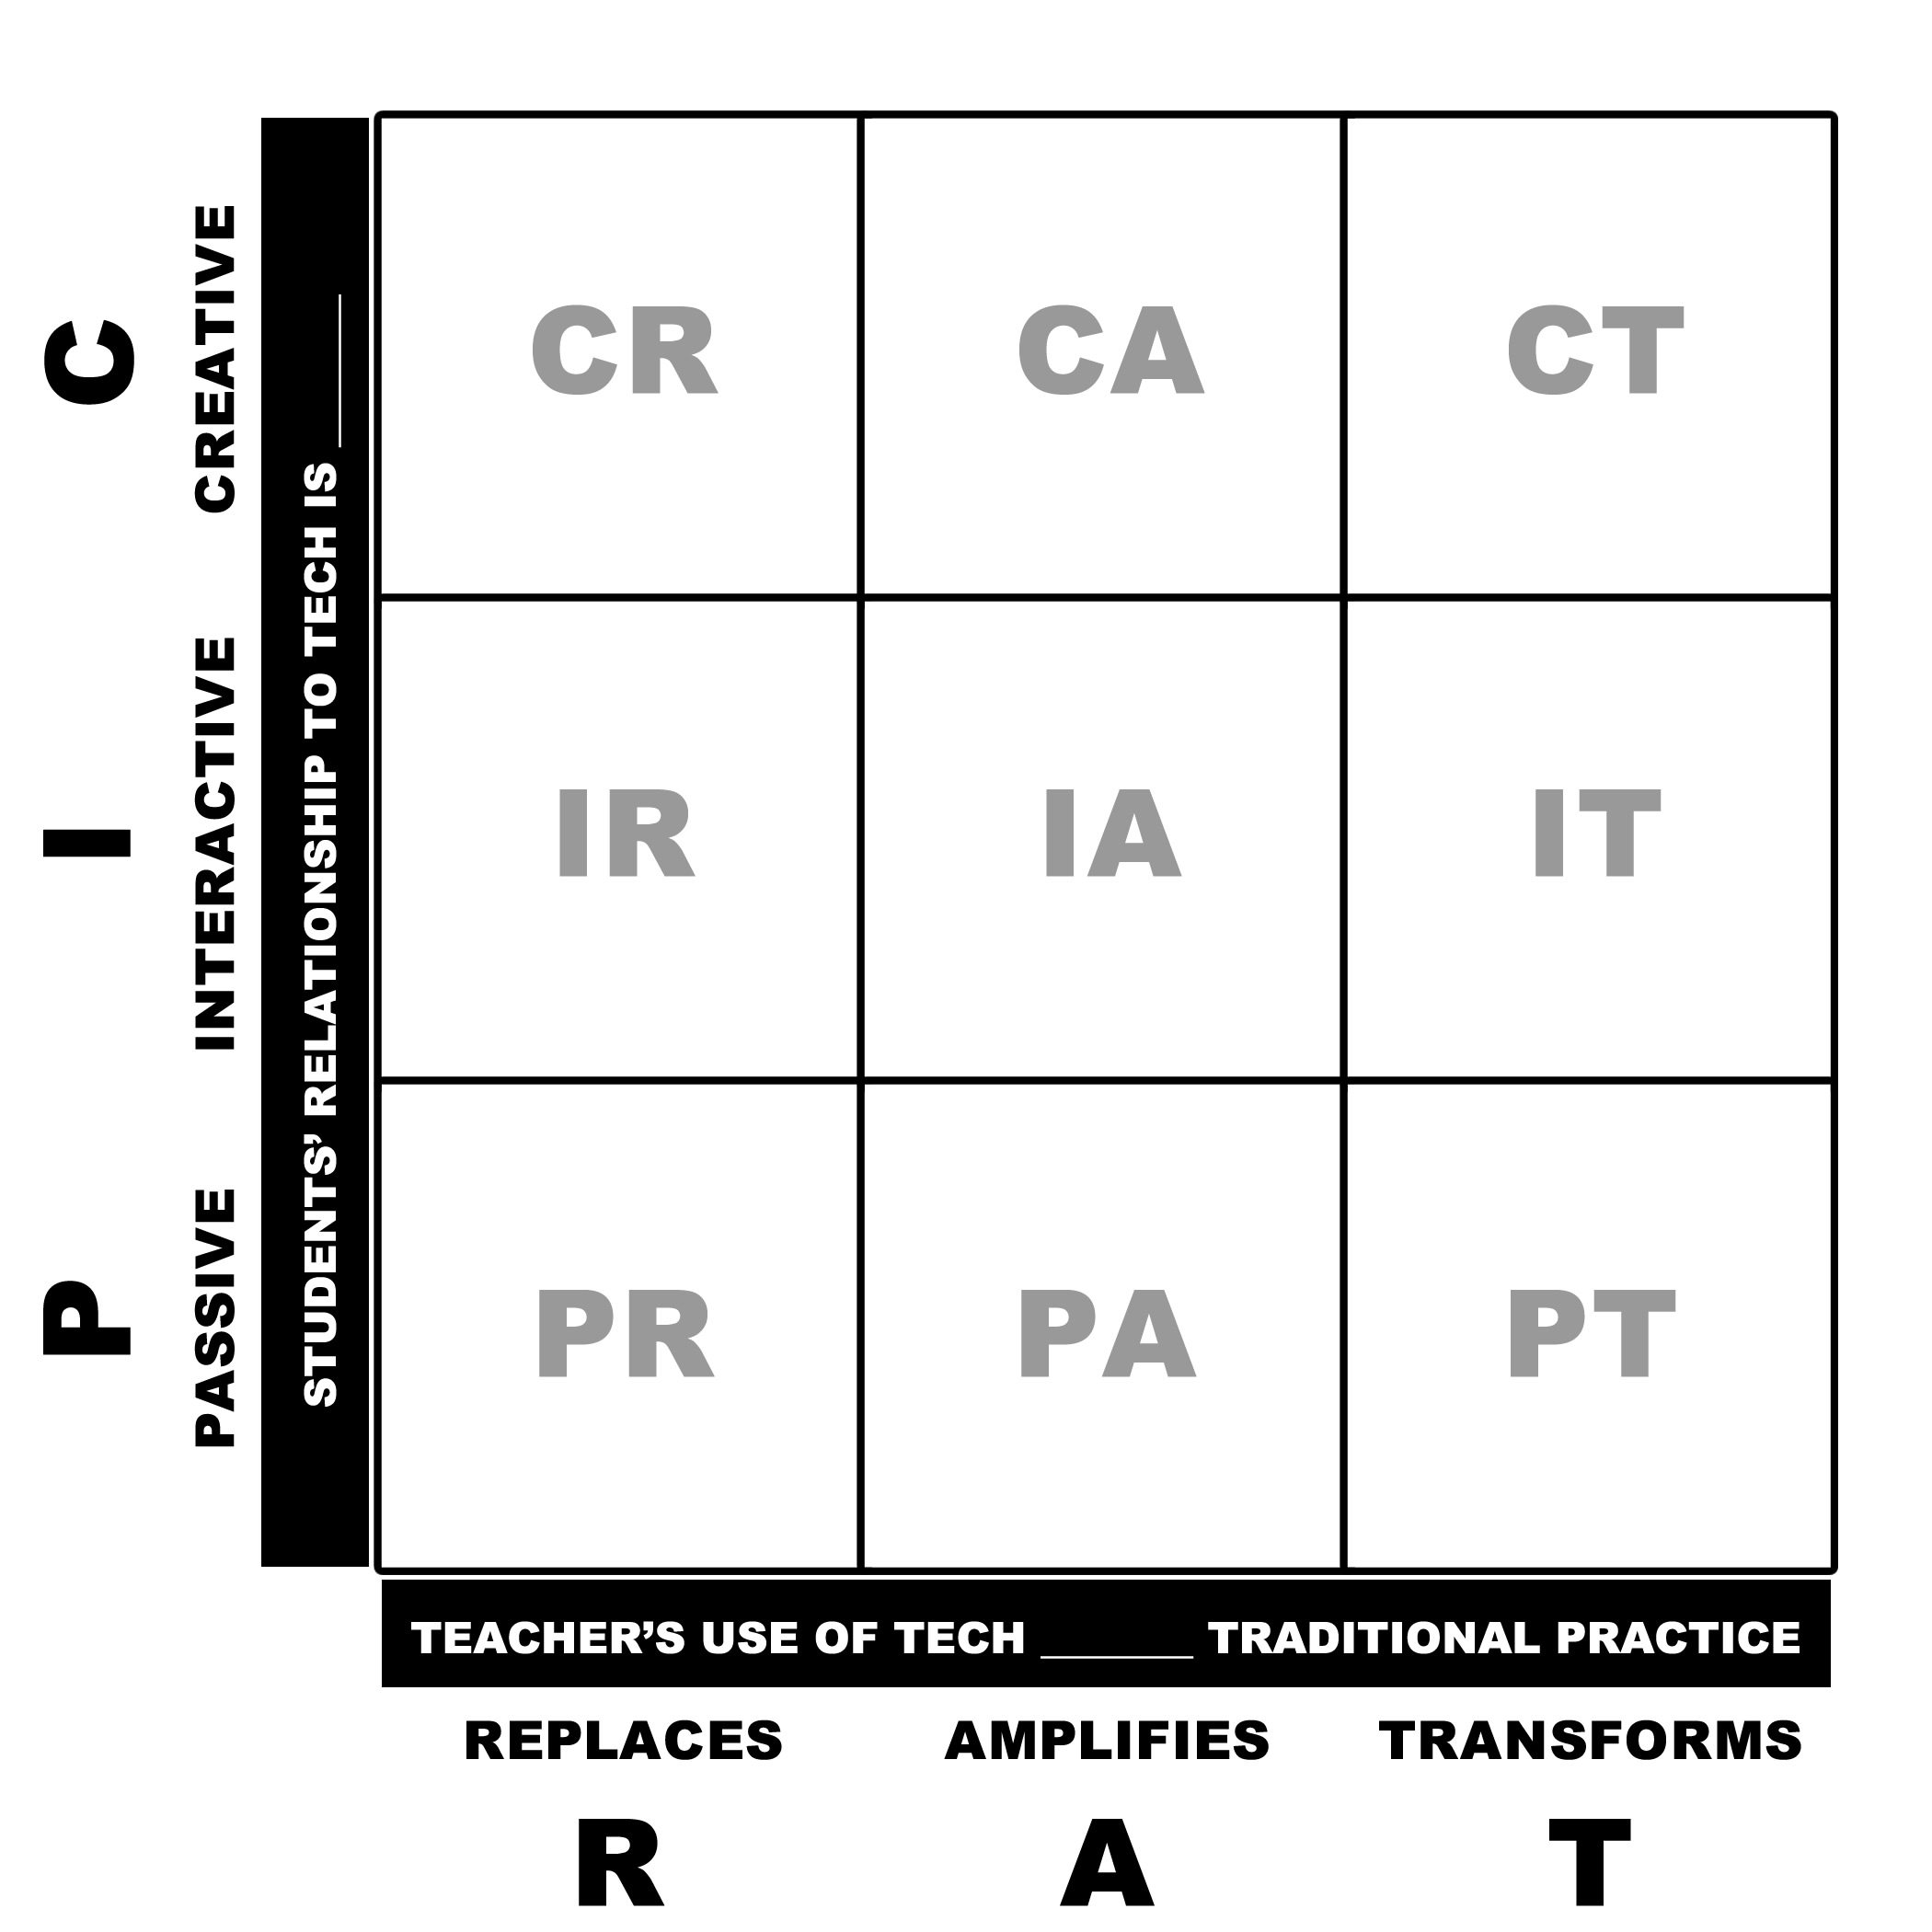 PICRAT matrix by Dr. Royce Kimmons